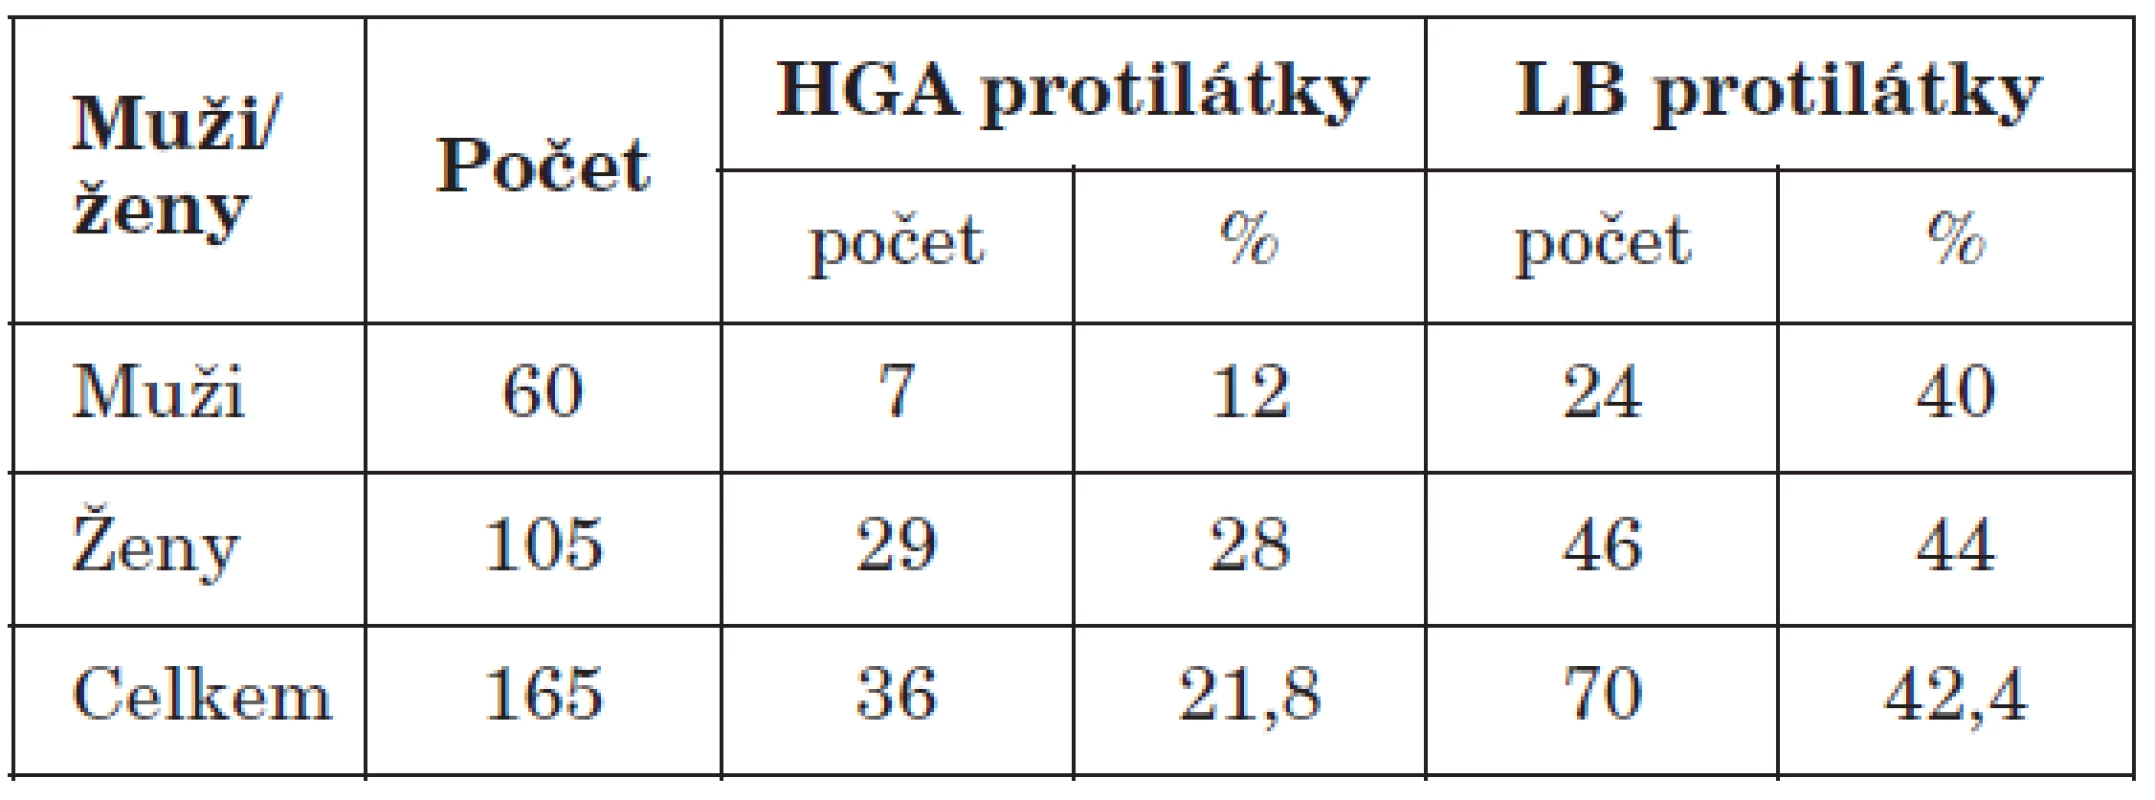 Porovnání infekčnosti u HGA a LB podle pohlaví
Table 3. Infectivity of human granulocytic ehrlichiosis (HGE) and lyme borreliosis (LB) by sex